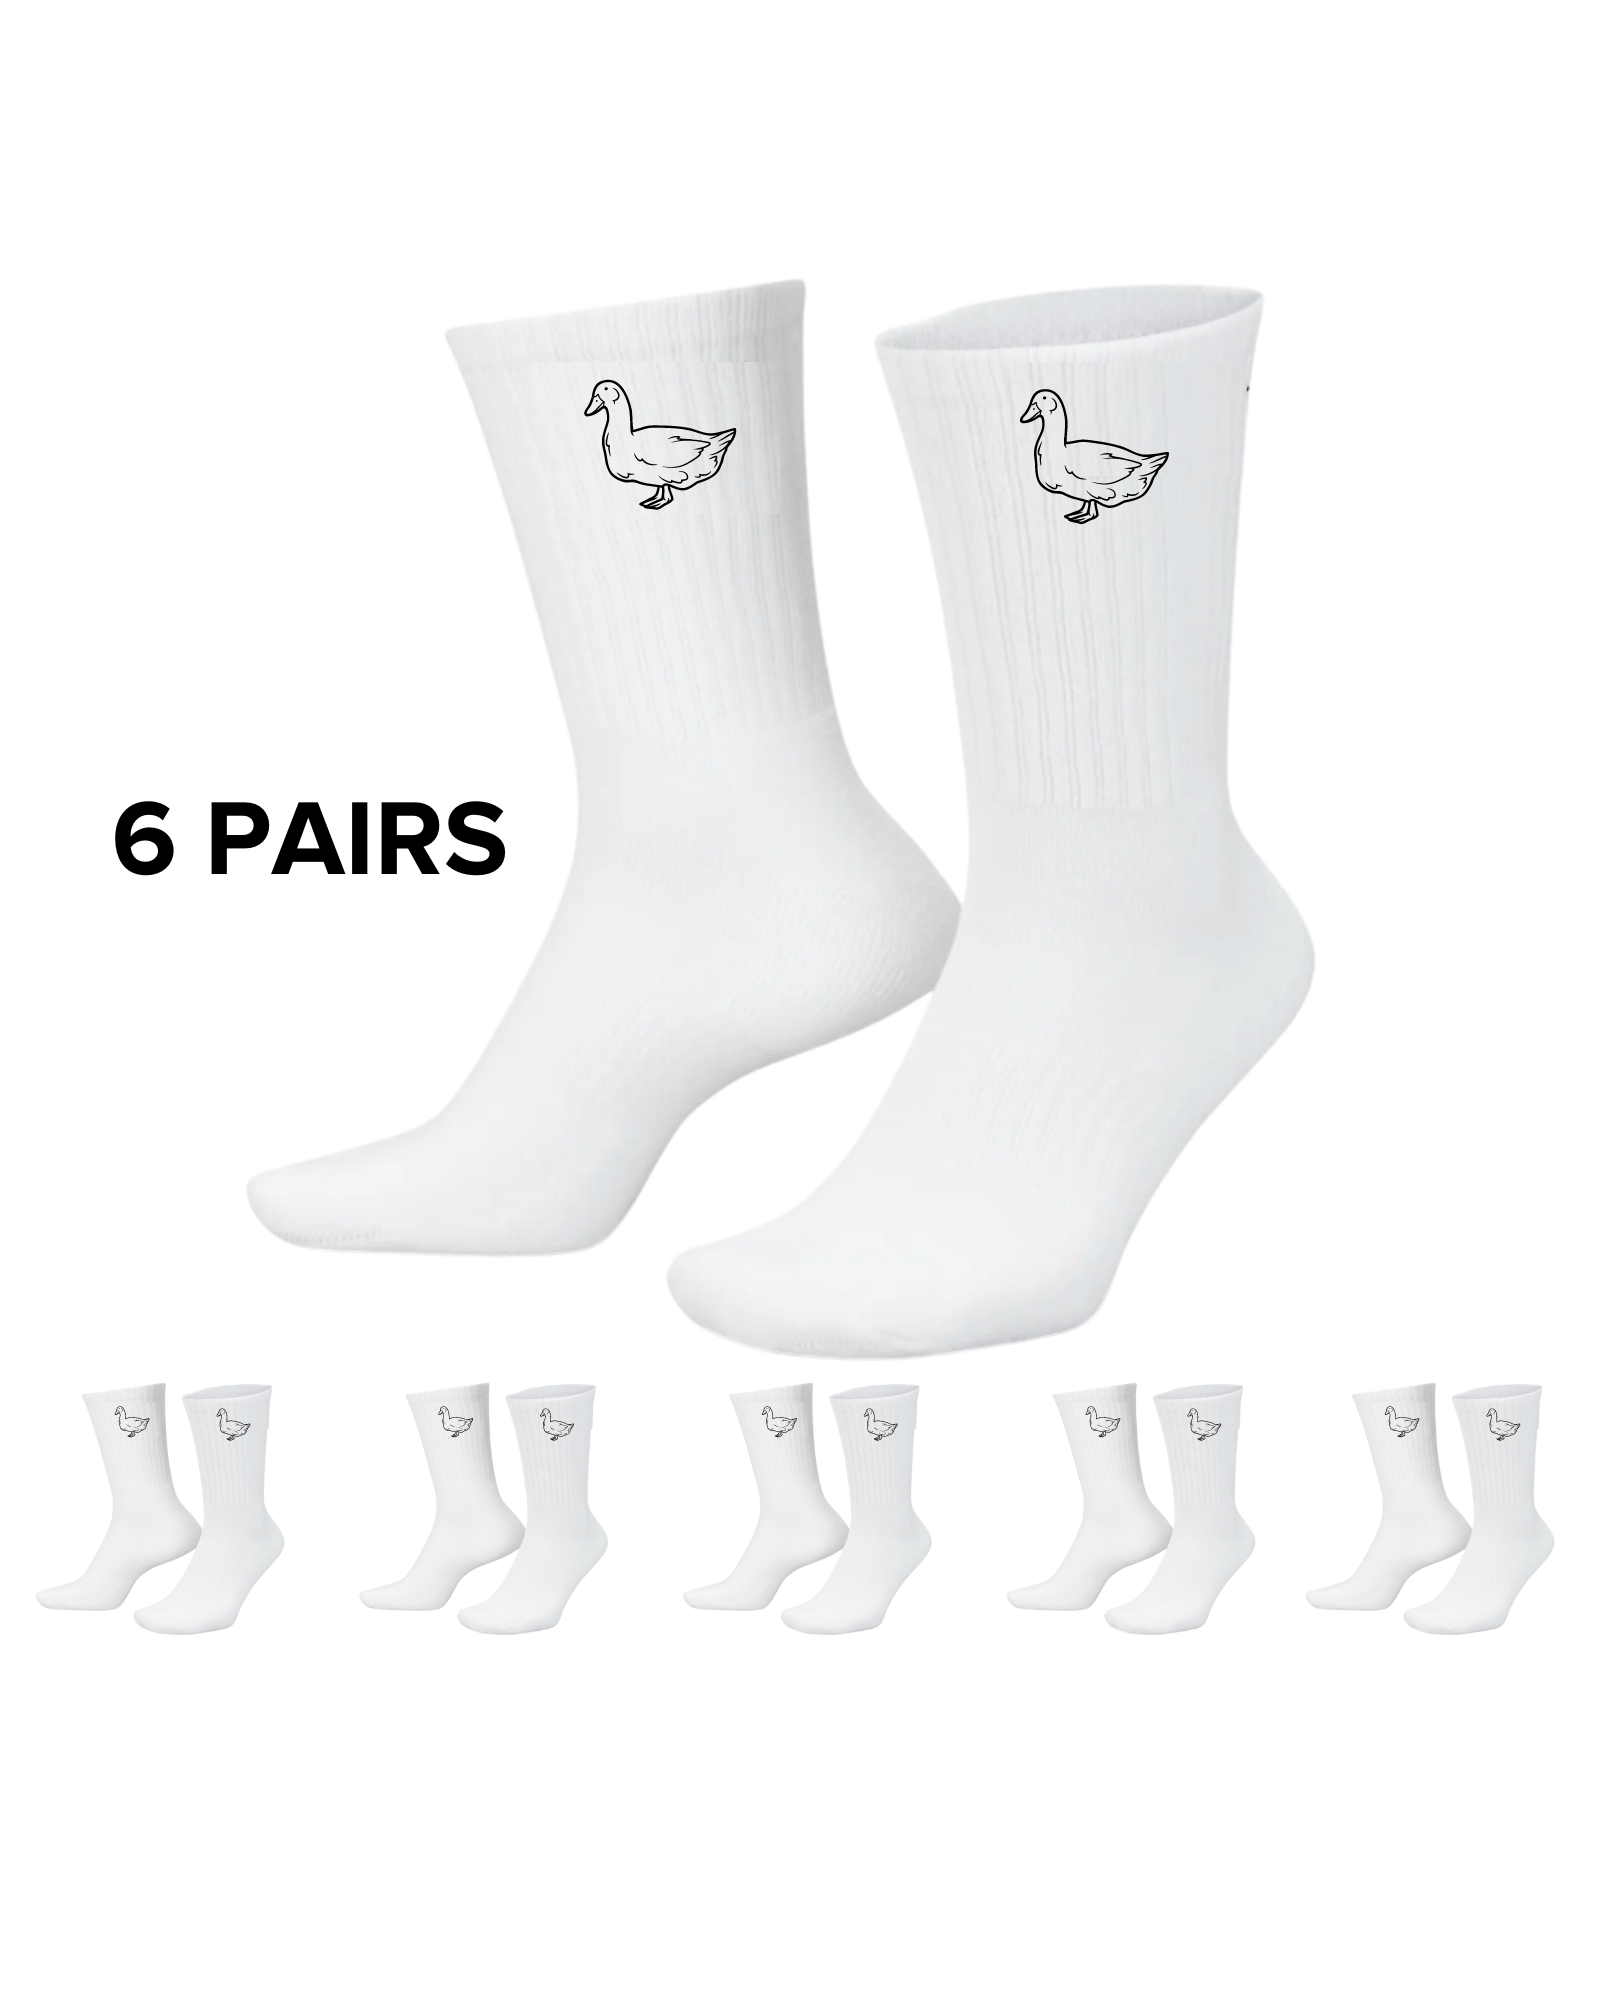 Duck Socks (Pre Order)